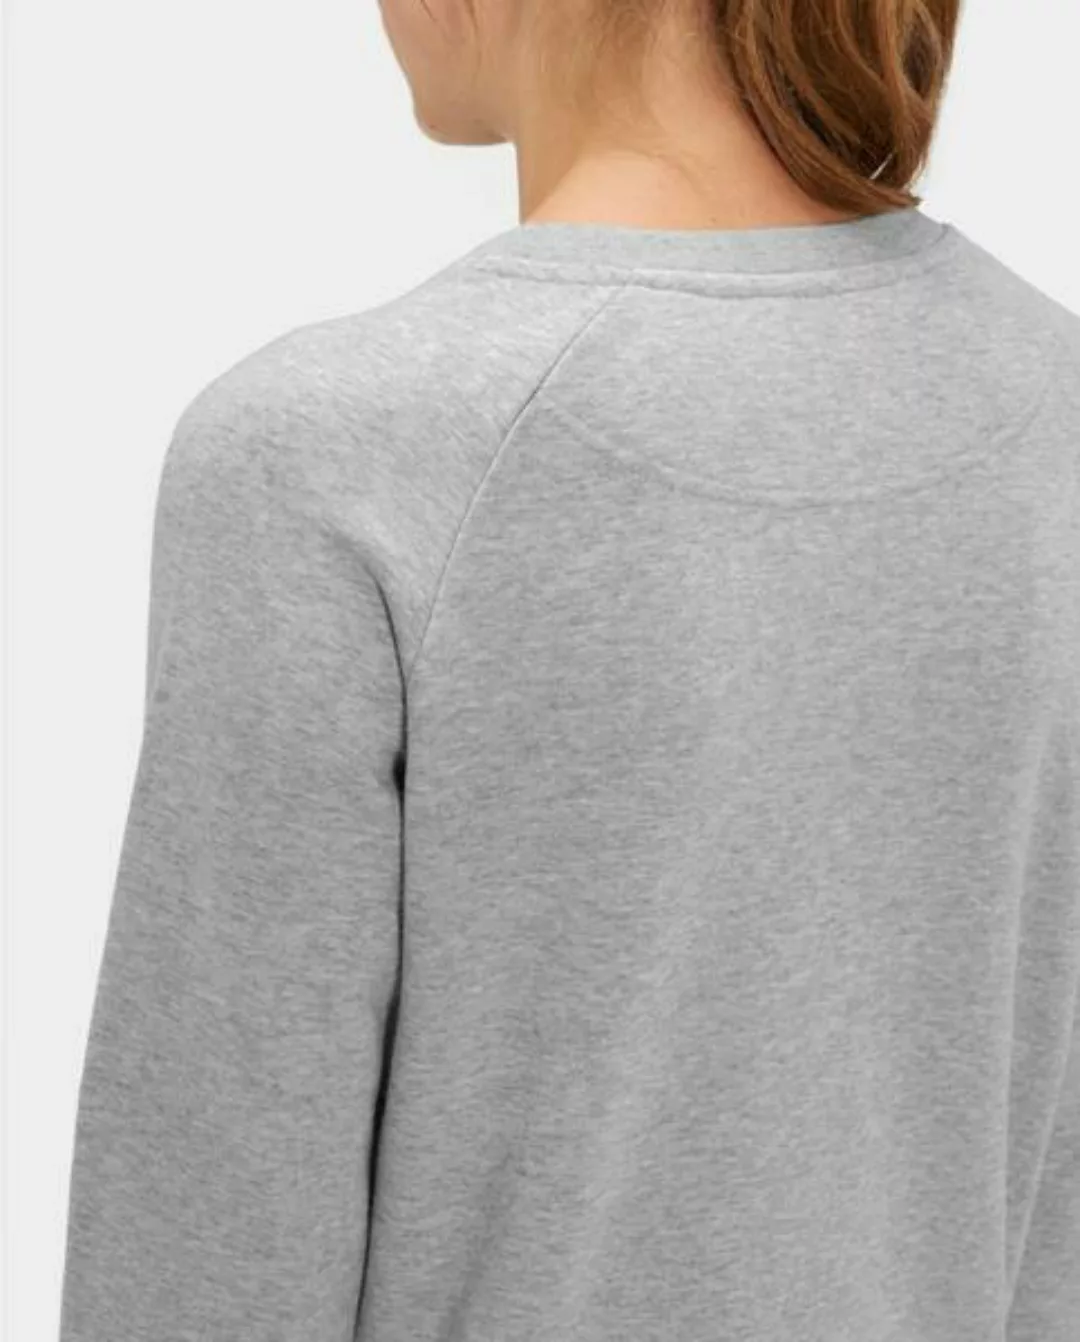 Damen Sweatshirt Bruder Bär günstig online kaufen